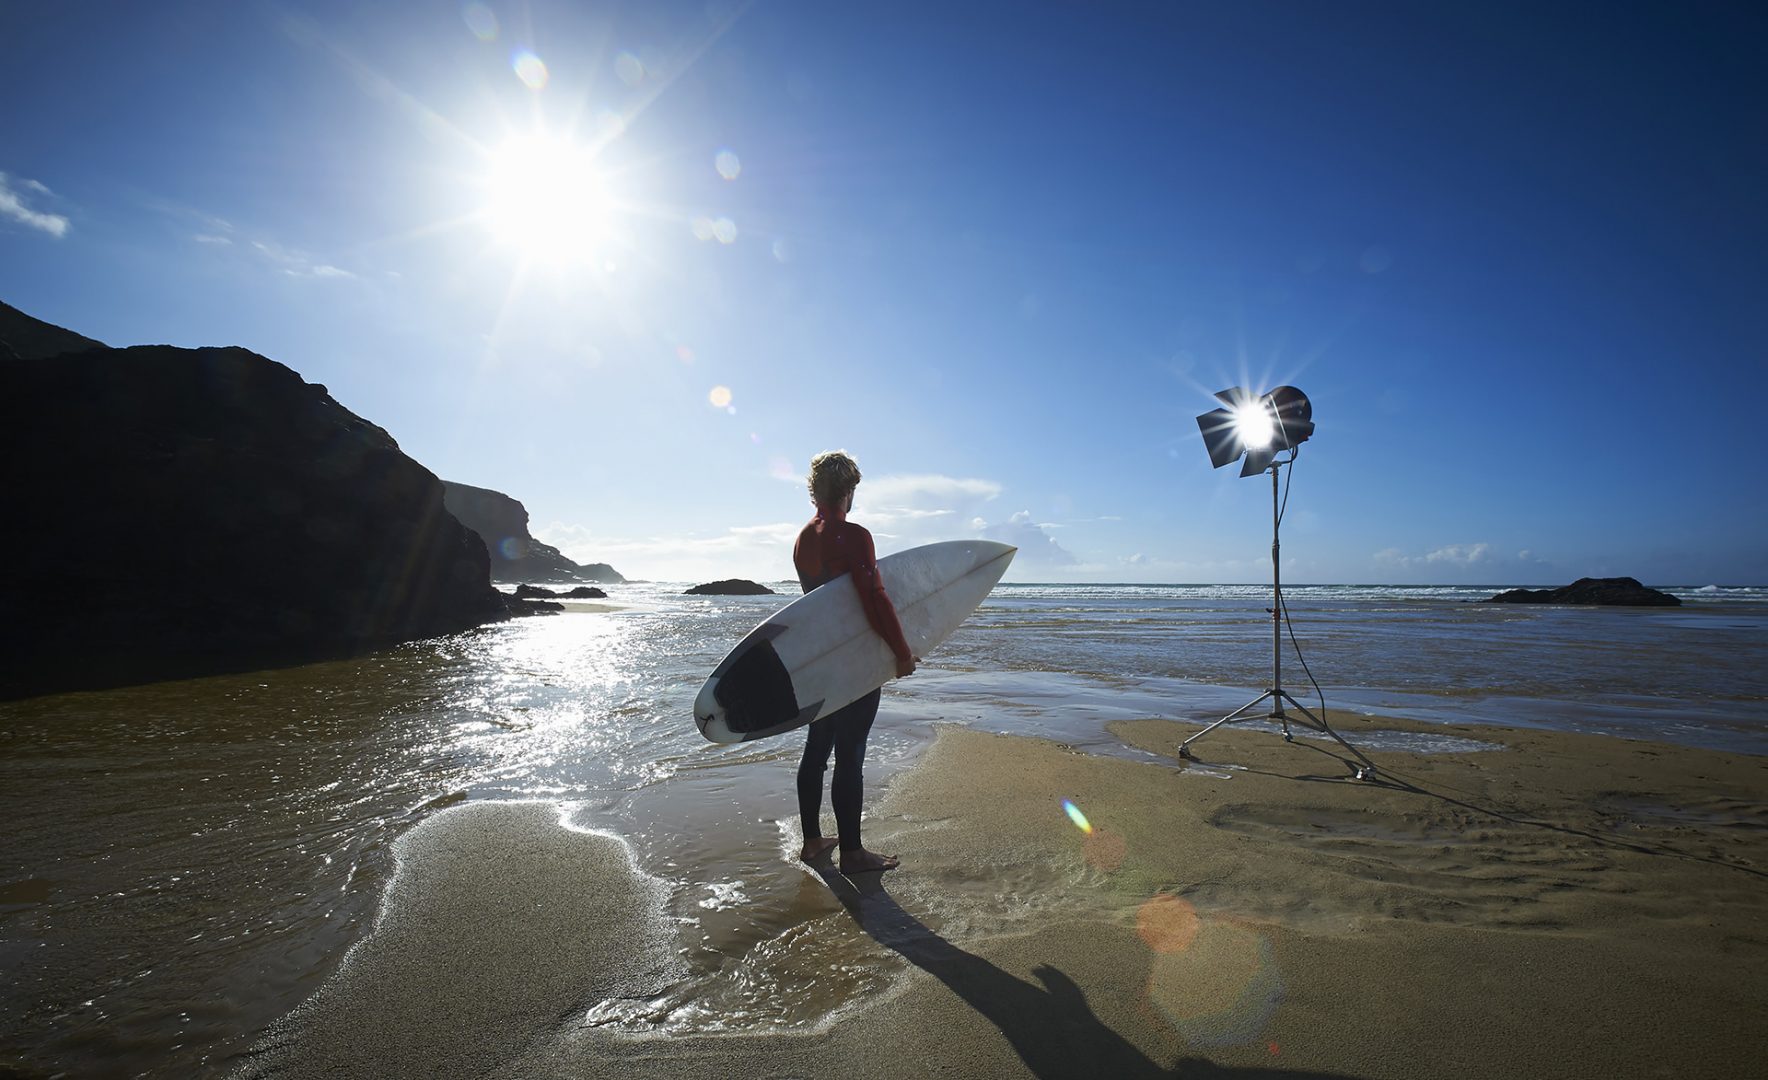 Photograph of a surfer on a Cornish beach